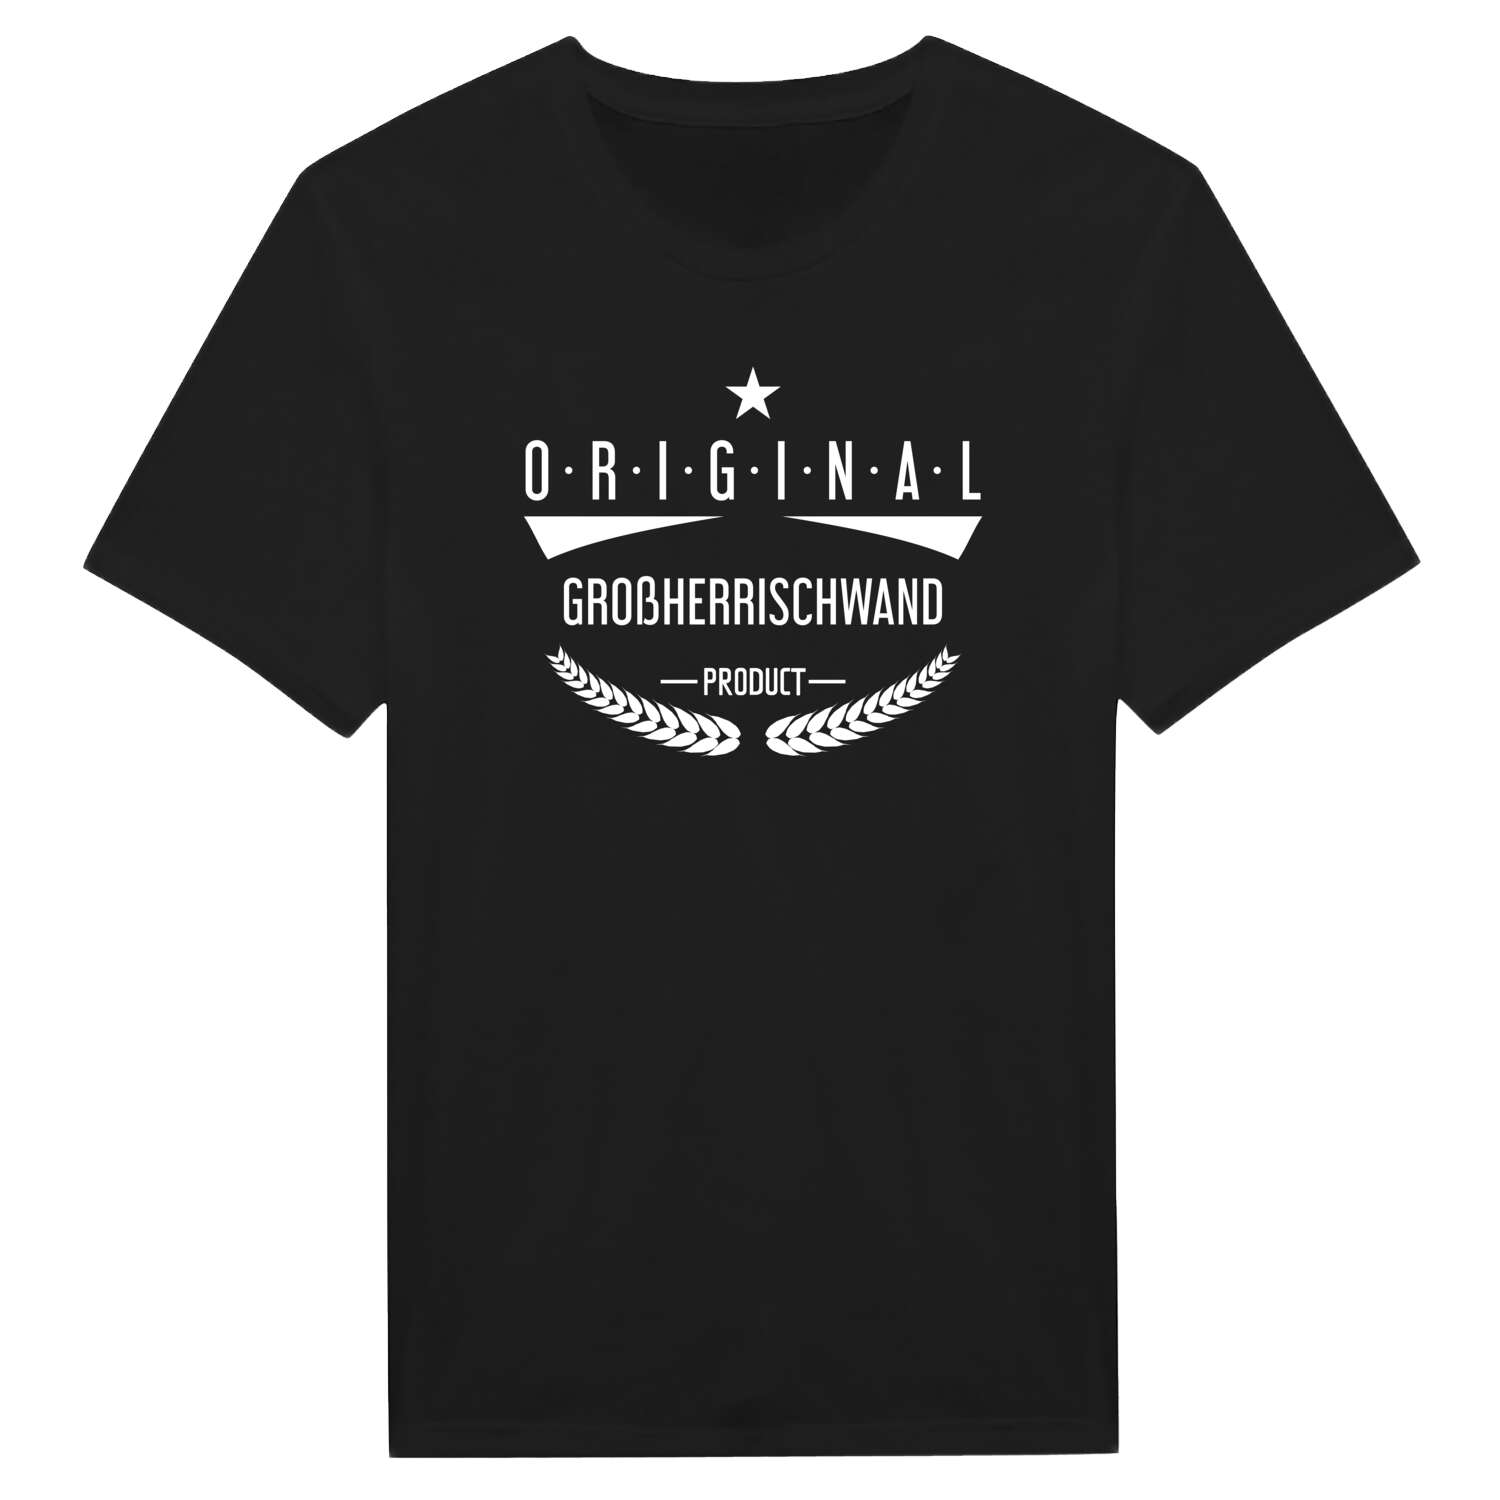 Großherrischwand T-Shirt »Original Product«